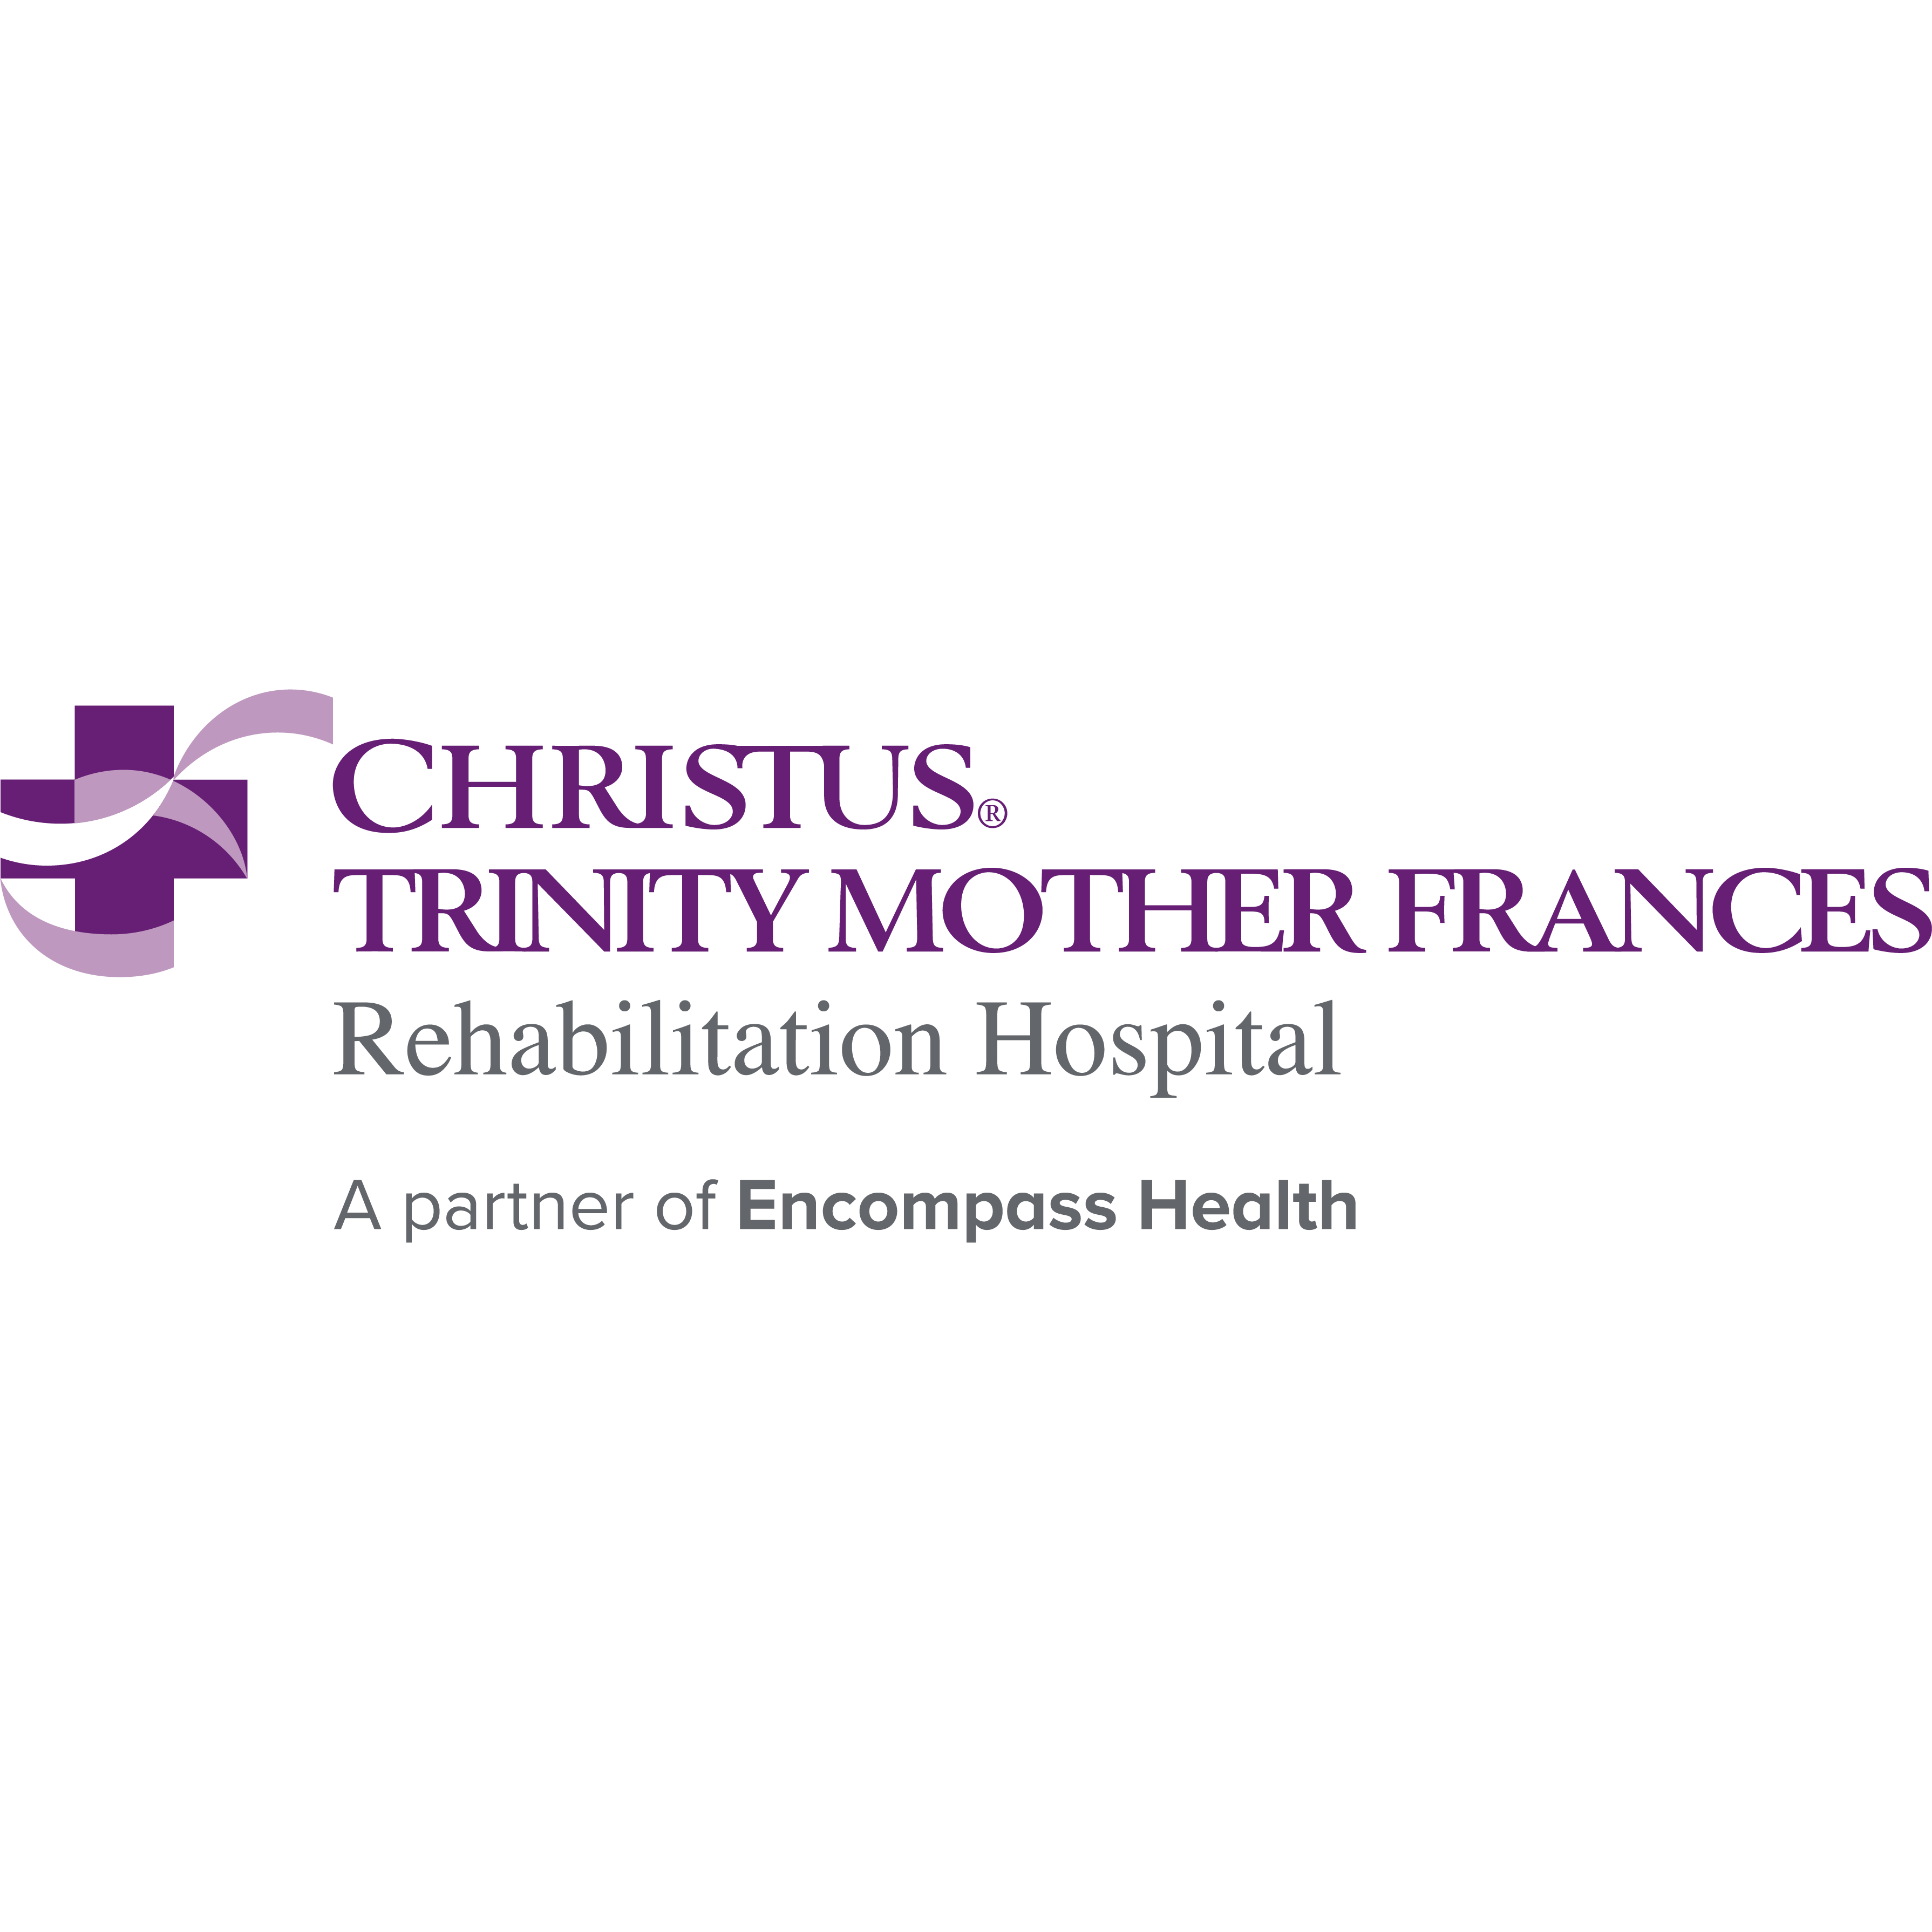 Christus Trinity Mother Frances Rehabilitation Hospital